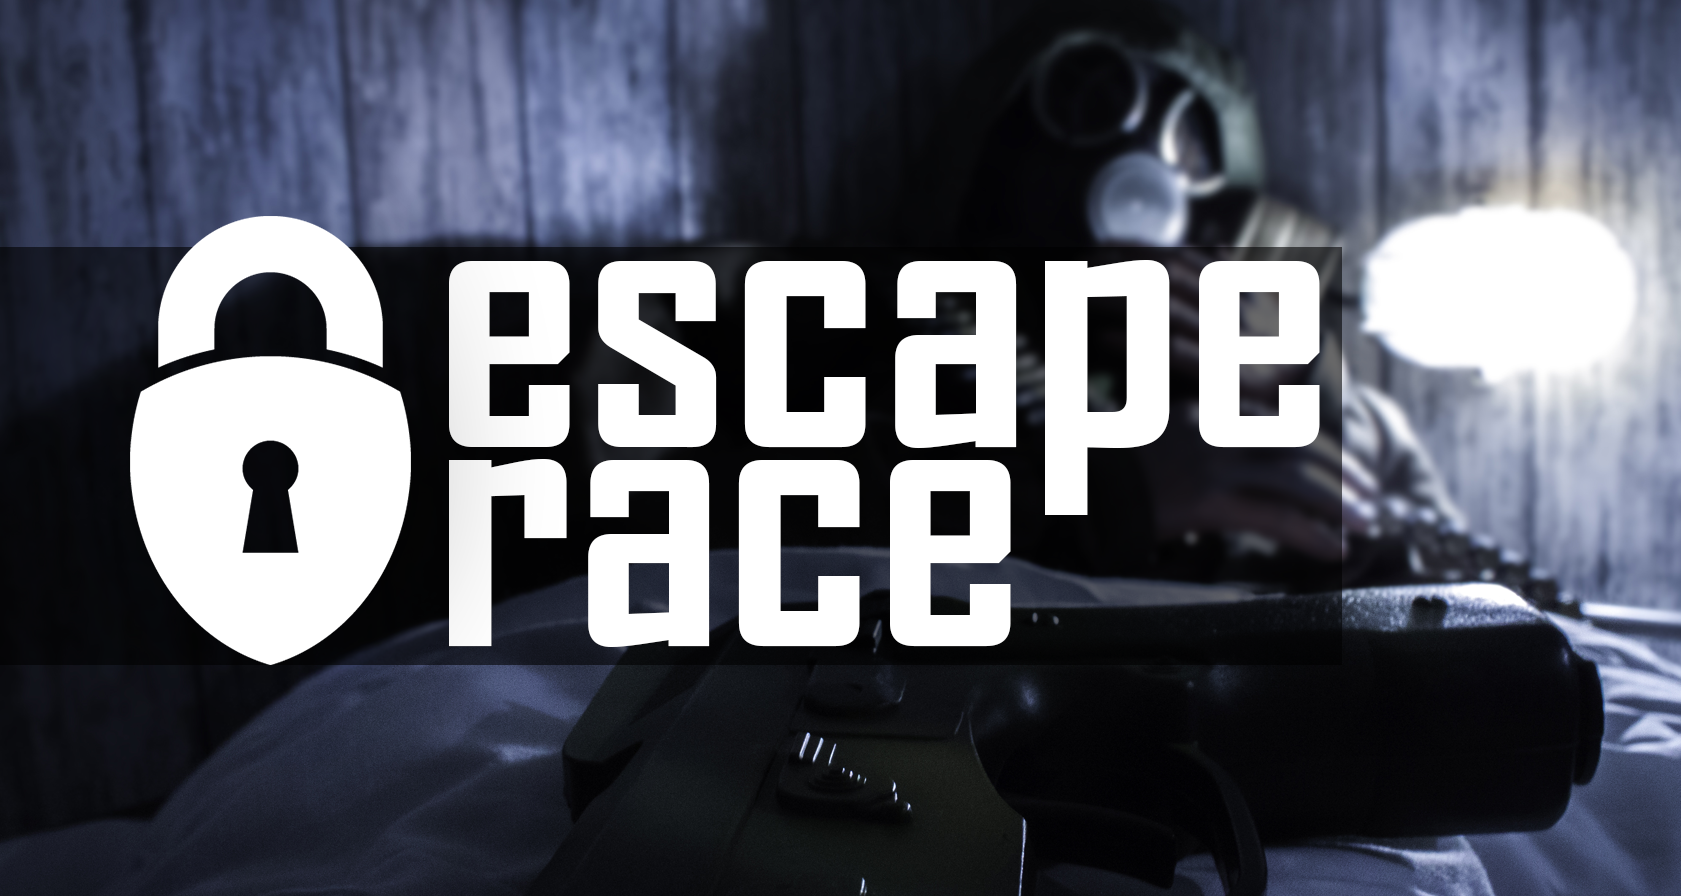 Personeelsuitje: Escape Room Race